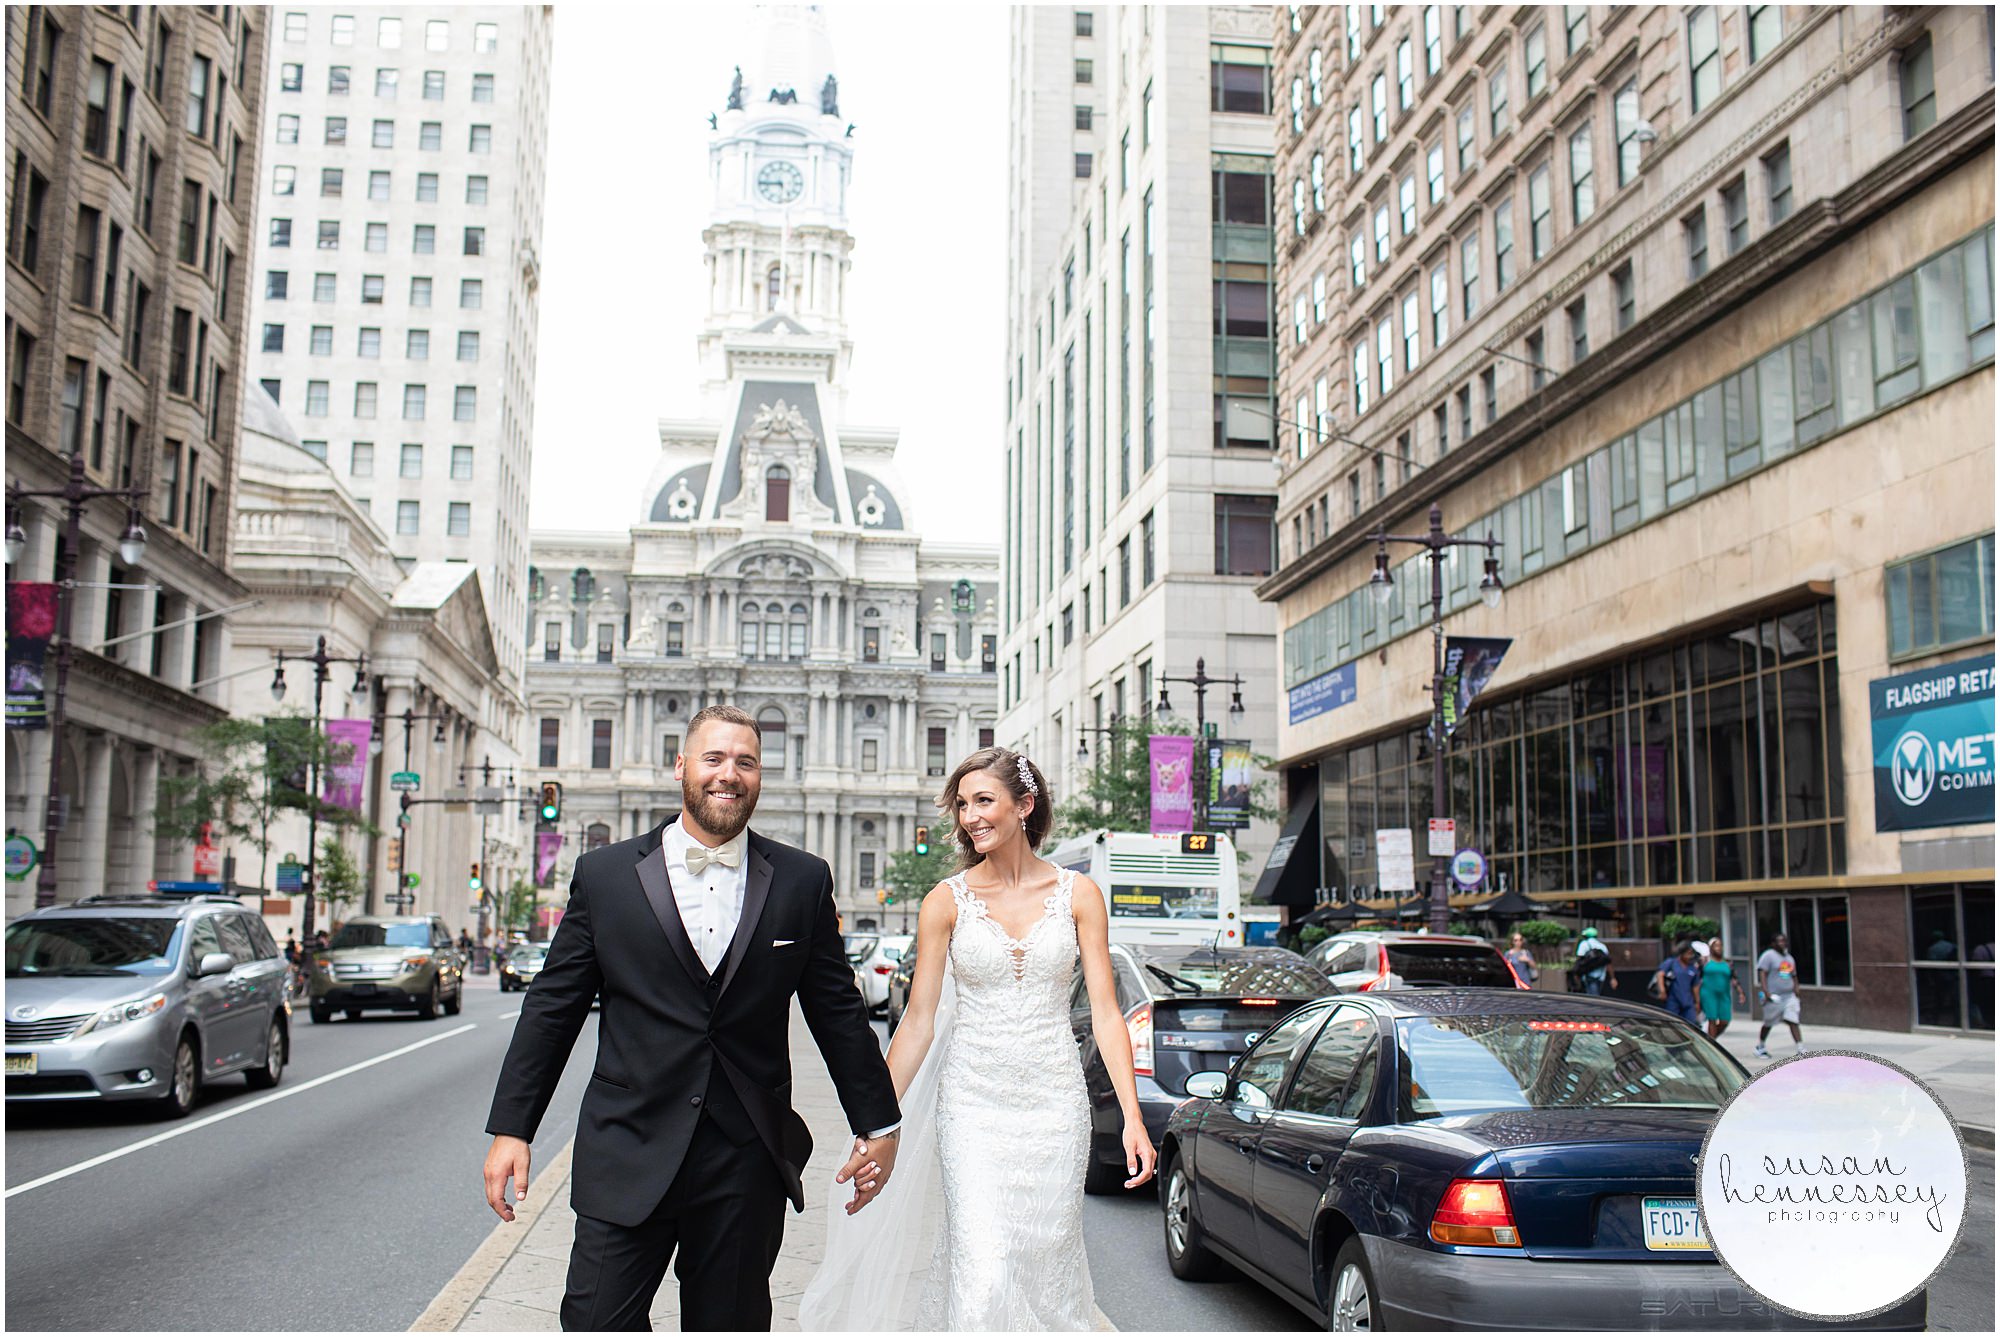 City Hall portraits for Philadelphia wedding.